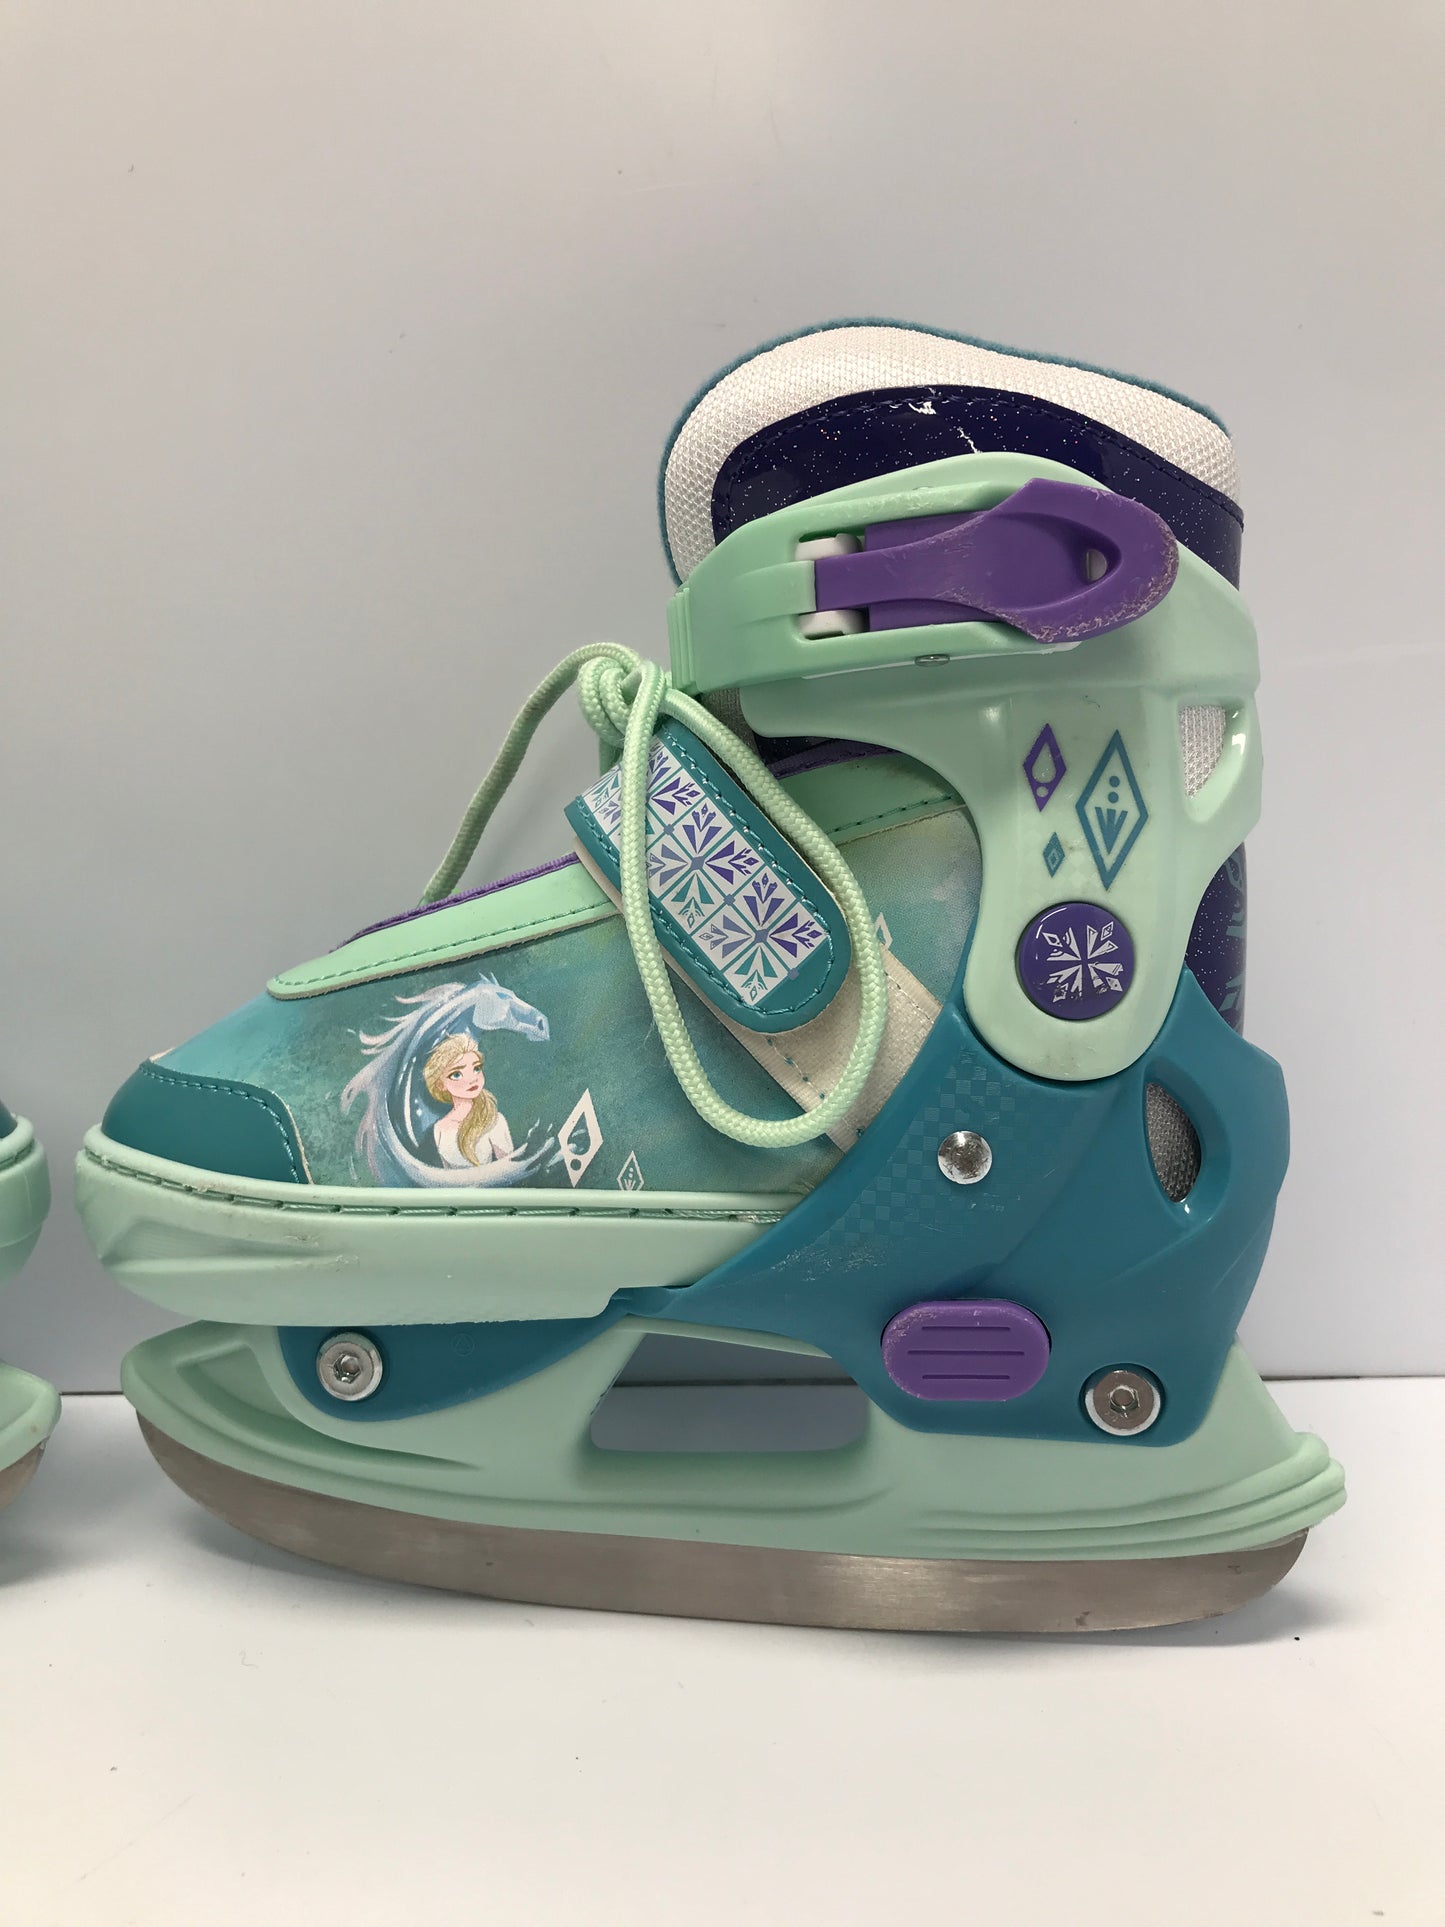 Ice Skates Child Size 8-11 Toddler Shoe Size Adjustable Disney Frozen Teal Purple Like New